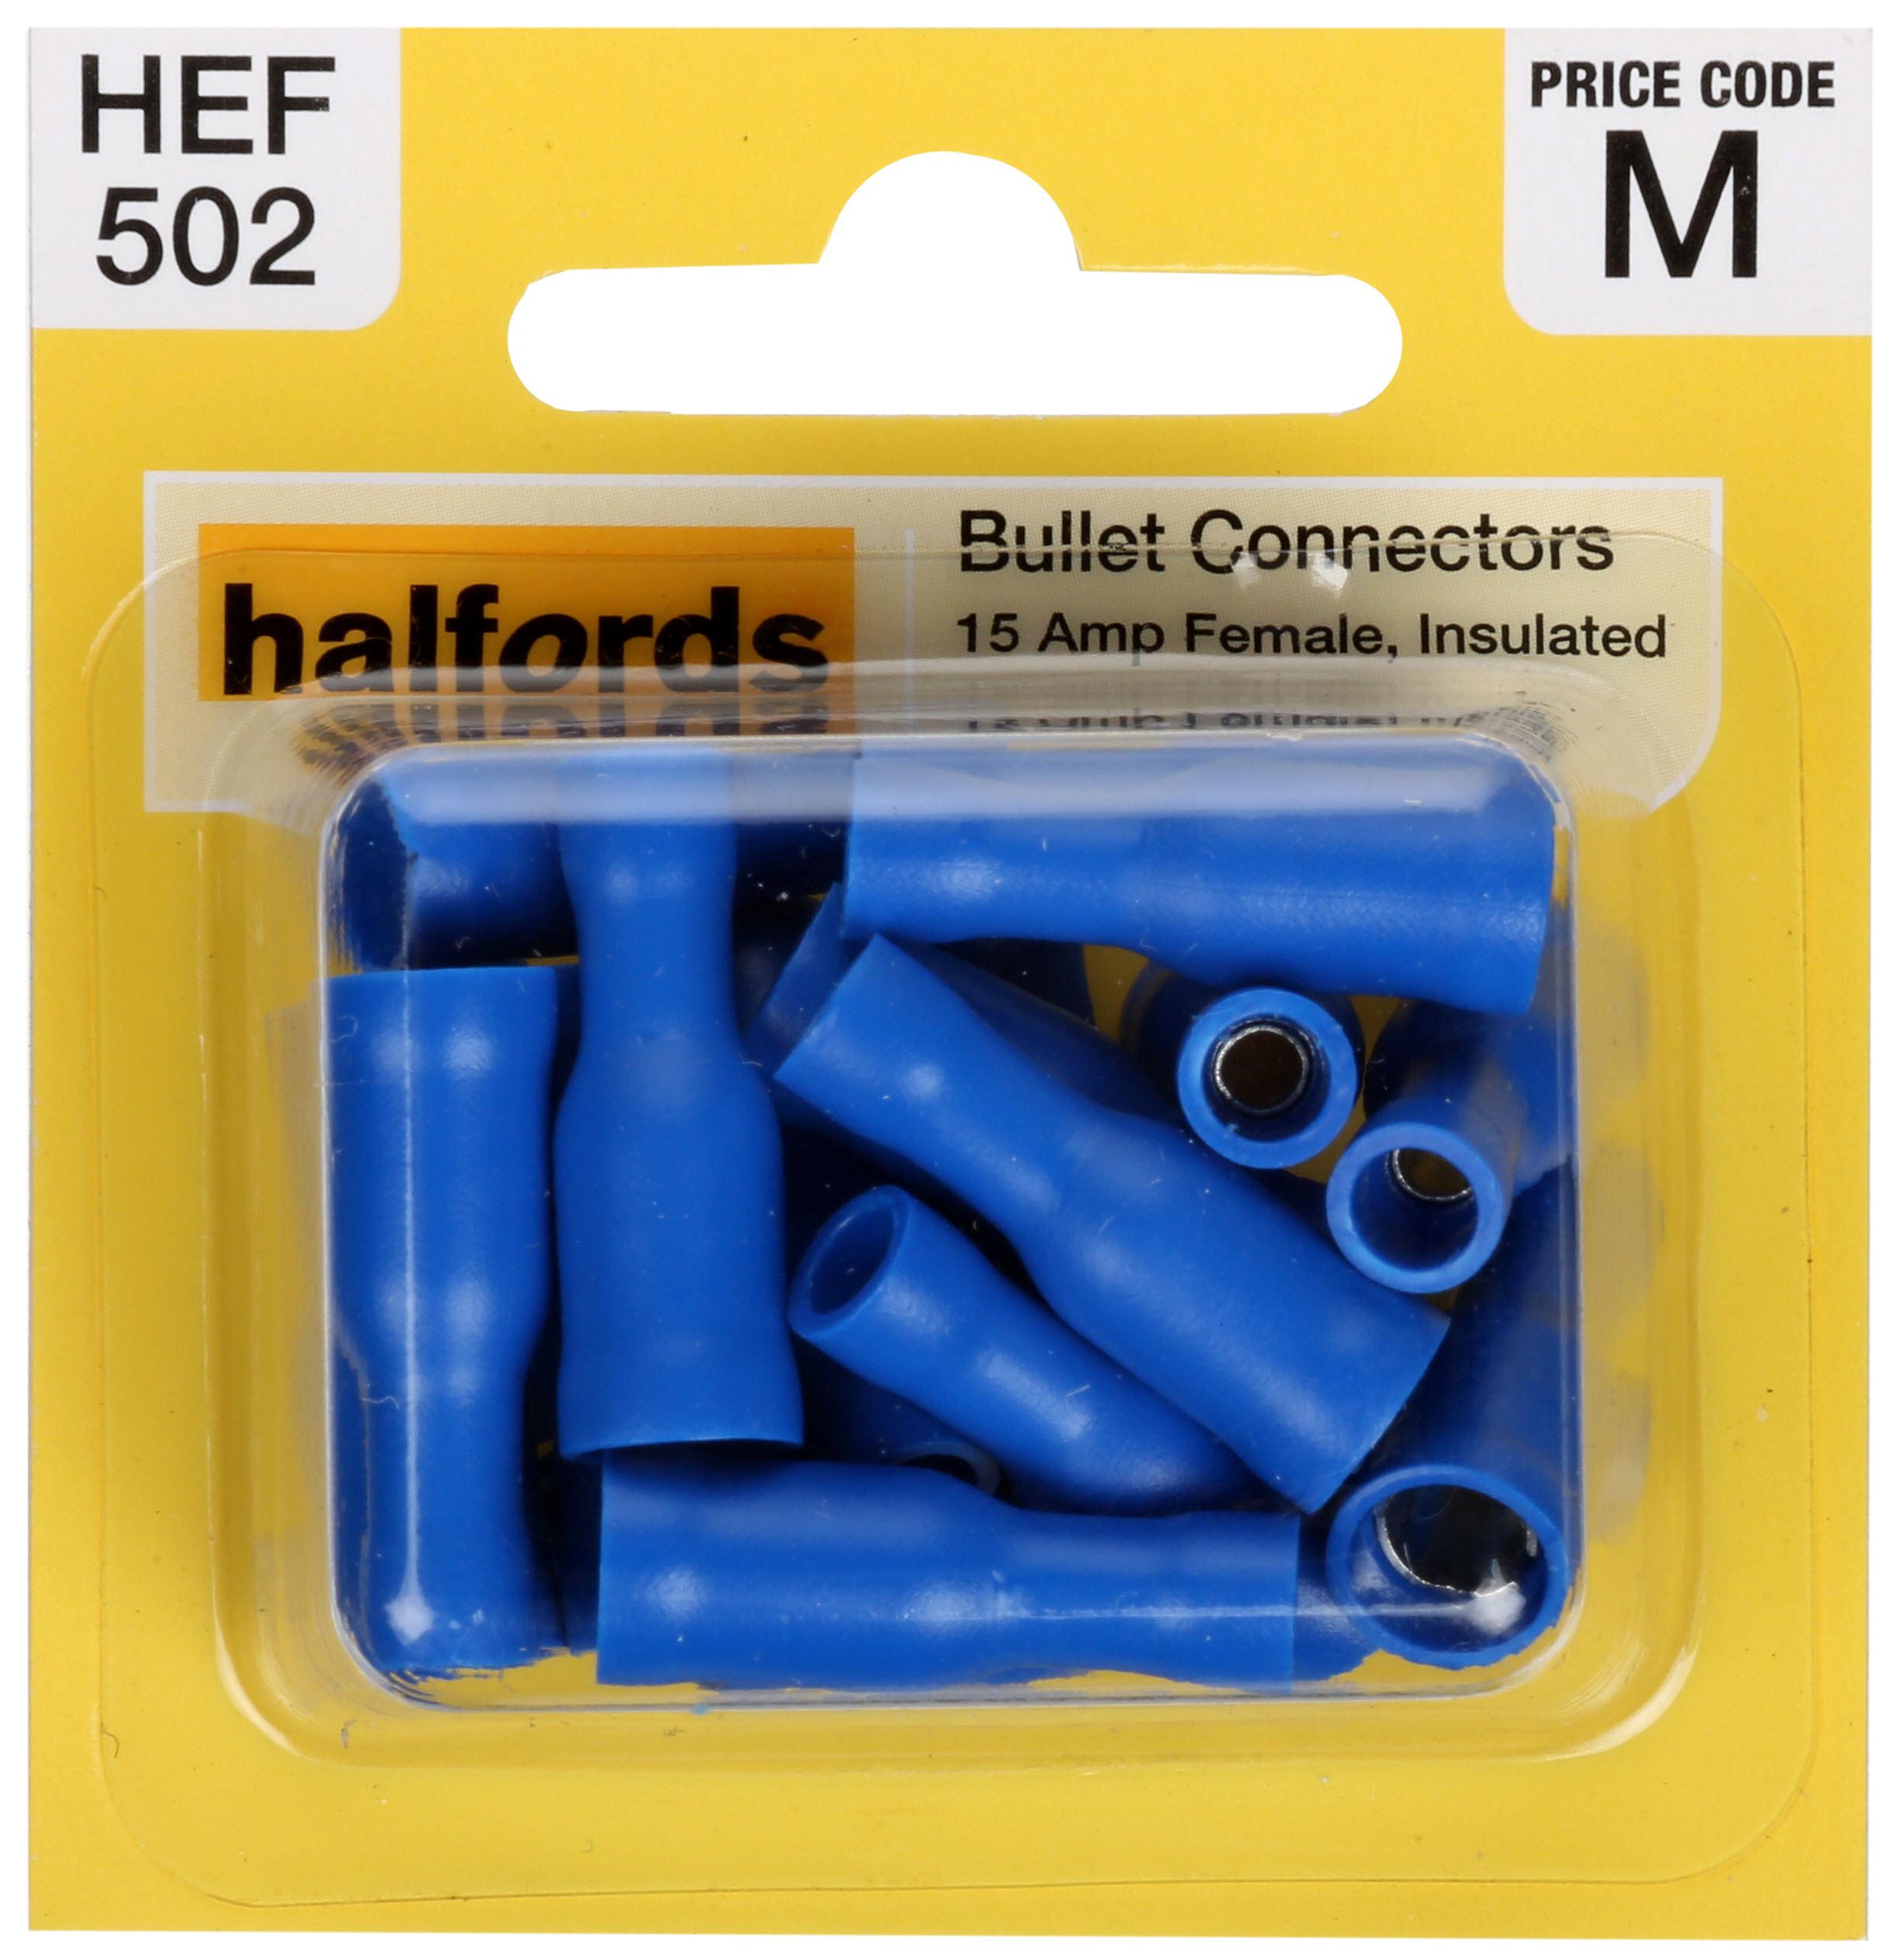 Halfords Bullet Connectors (Hef502) 15 Amp/Female